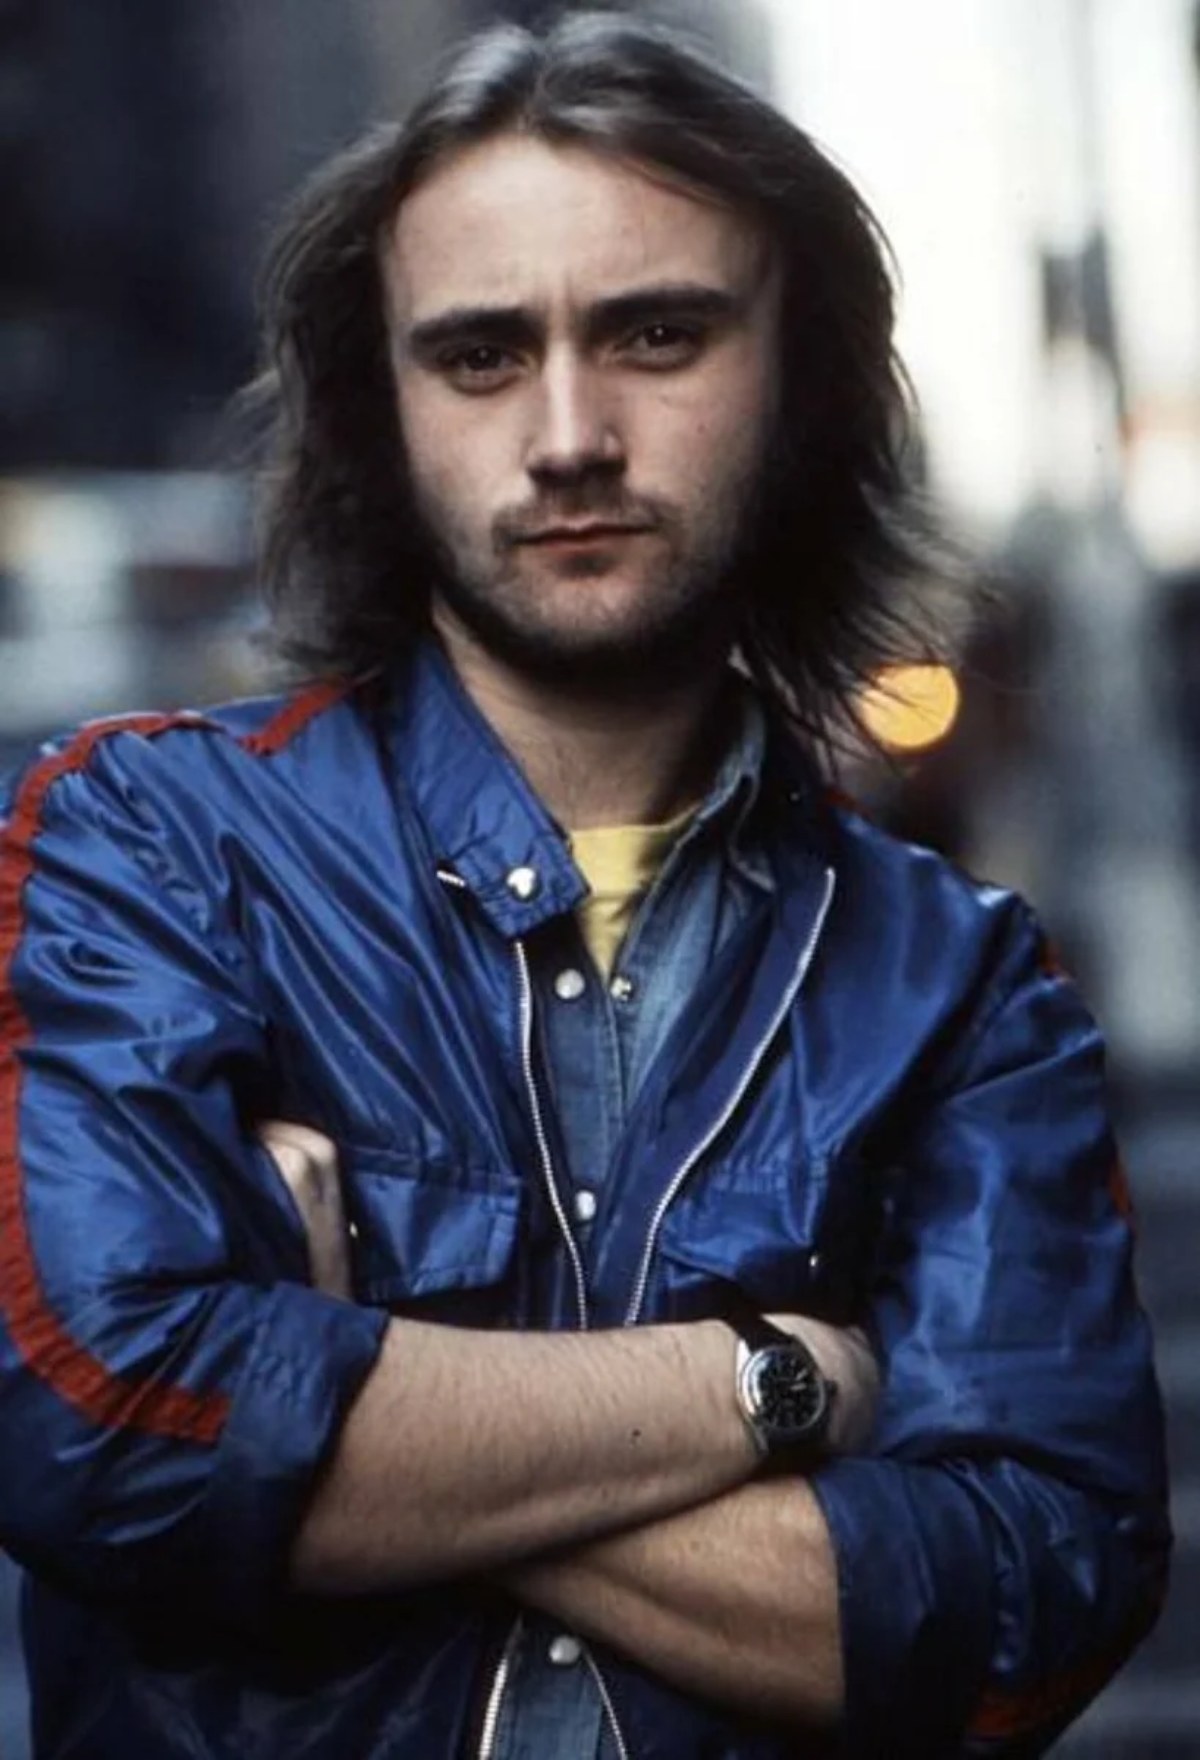 Phil Collins as part of Genesis, 70s